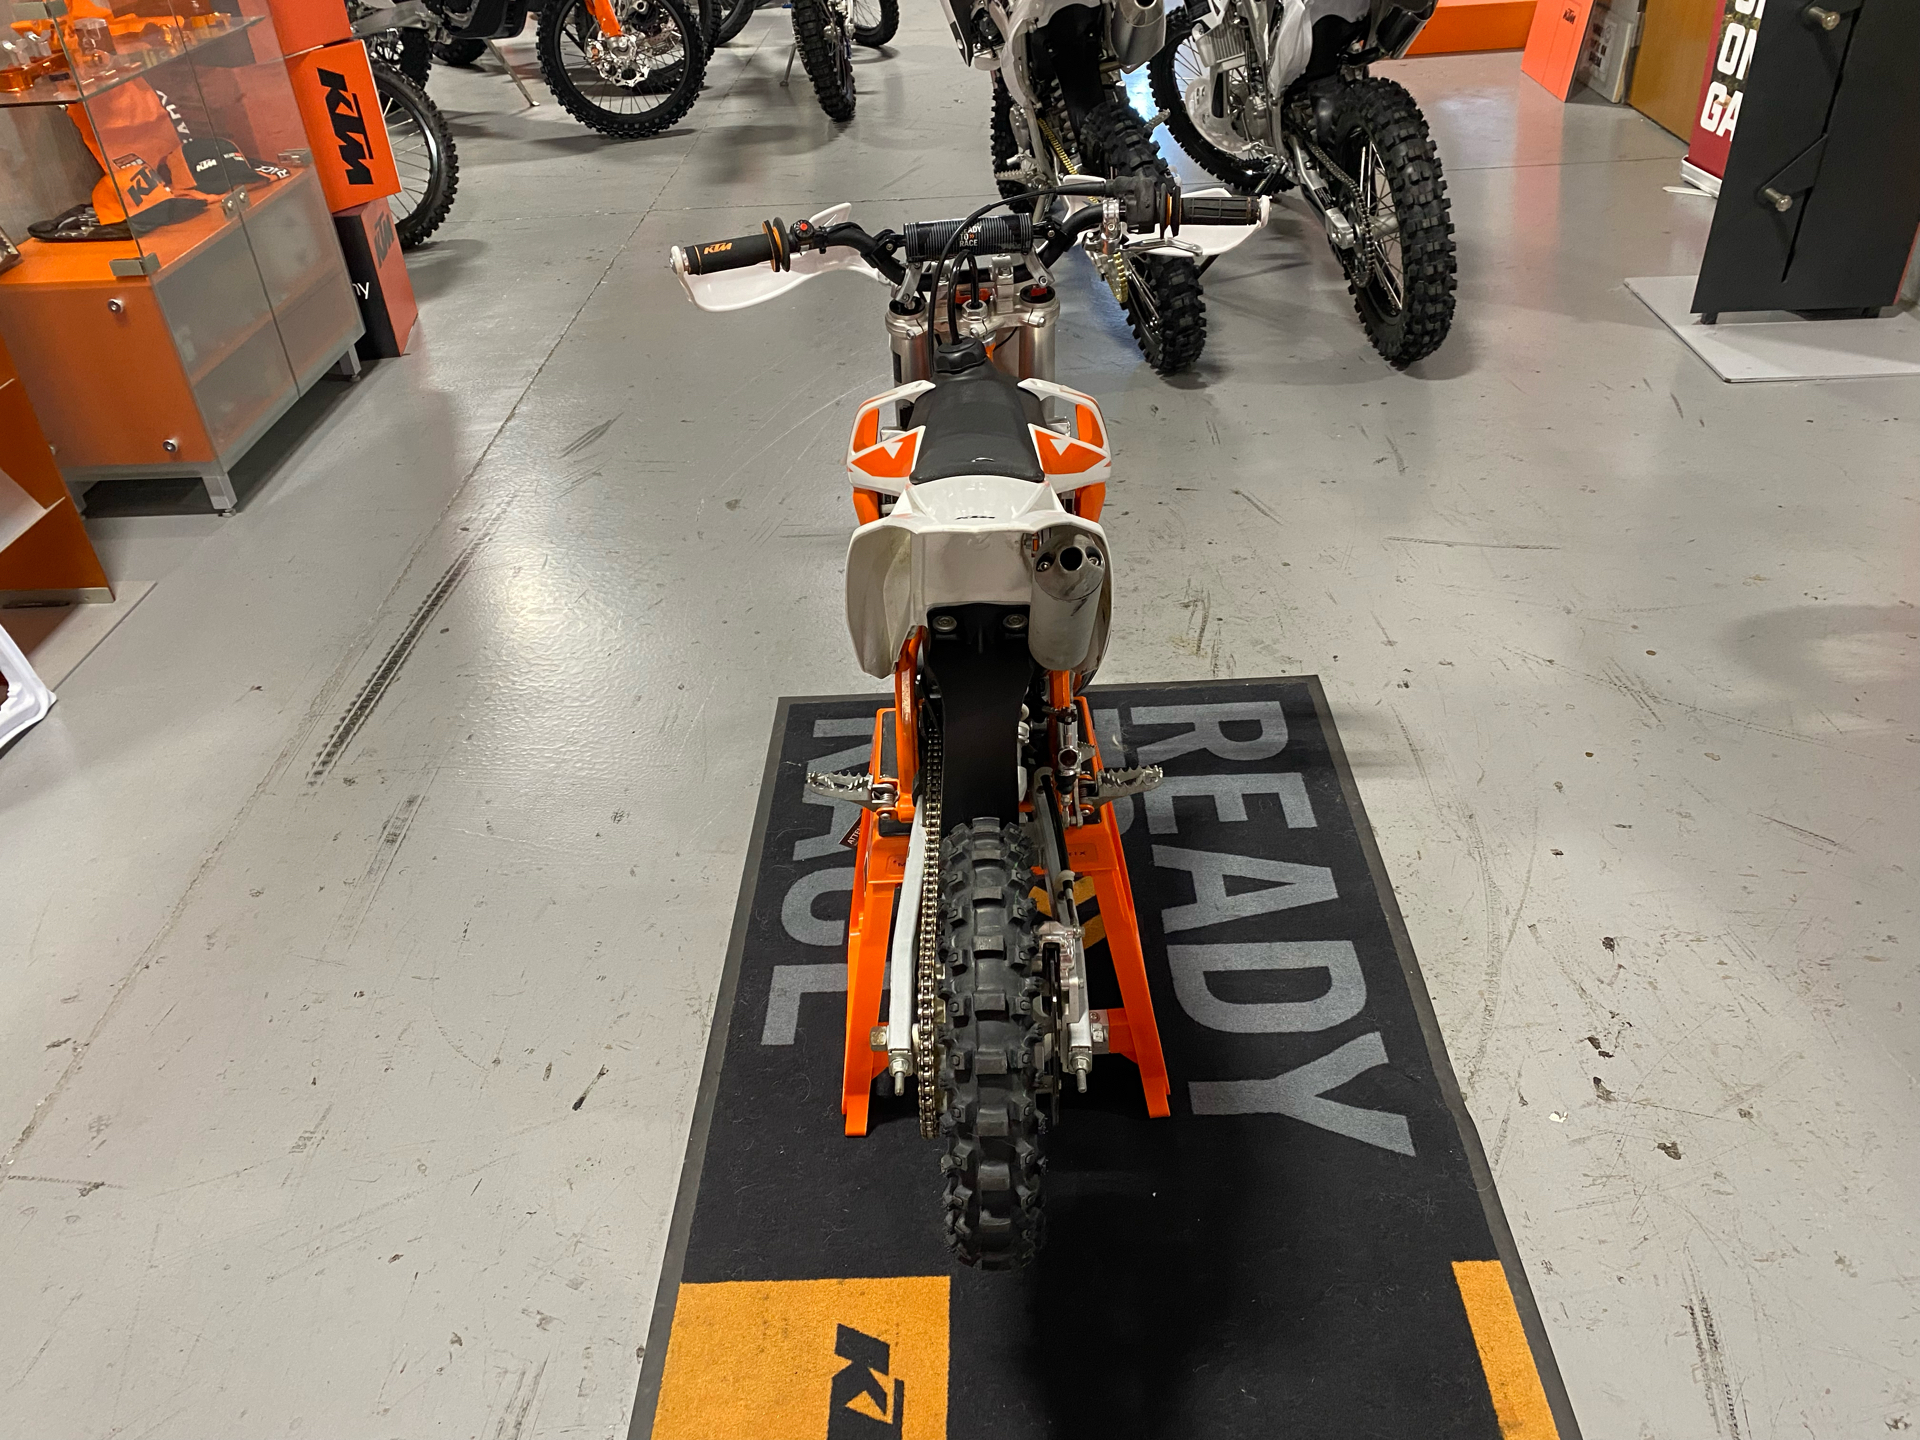 2019 KTM 50 SX in Austin, Texas - Photo 3